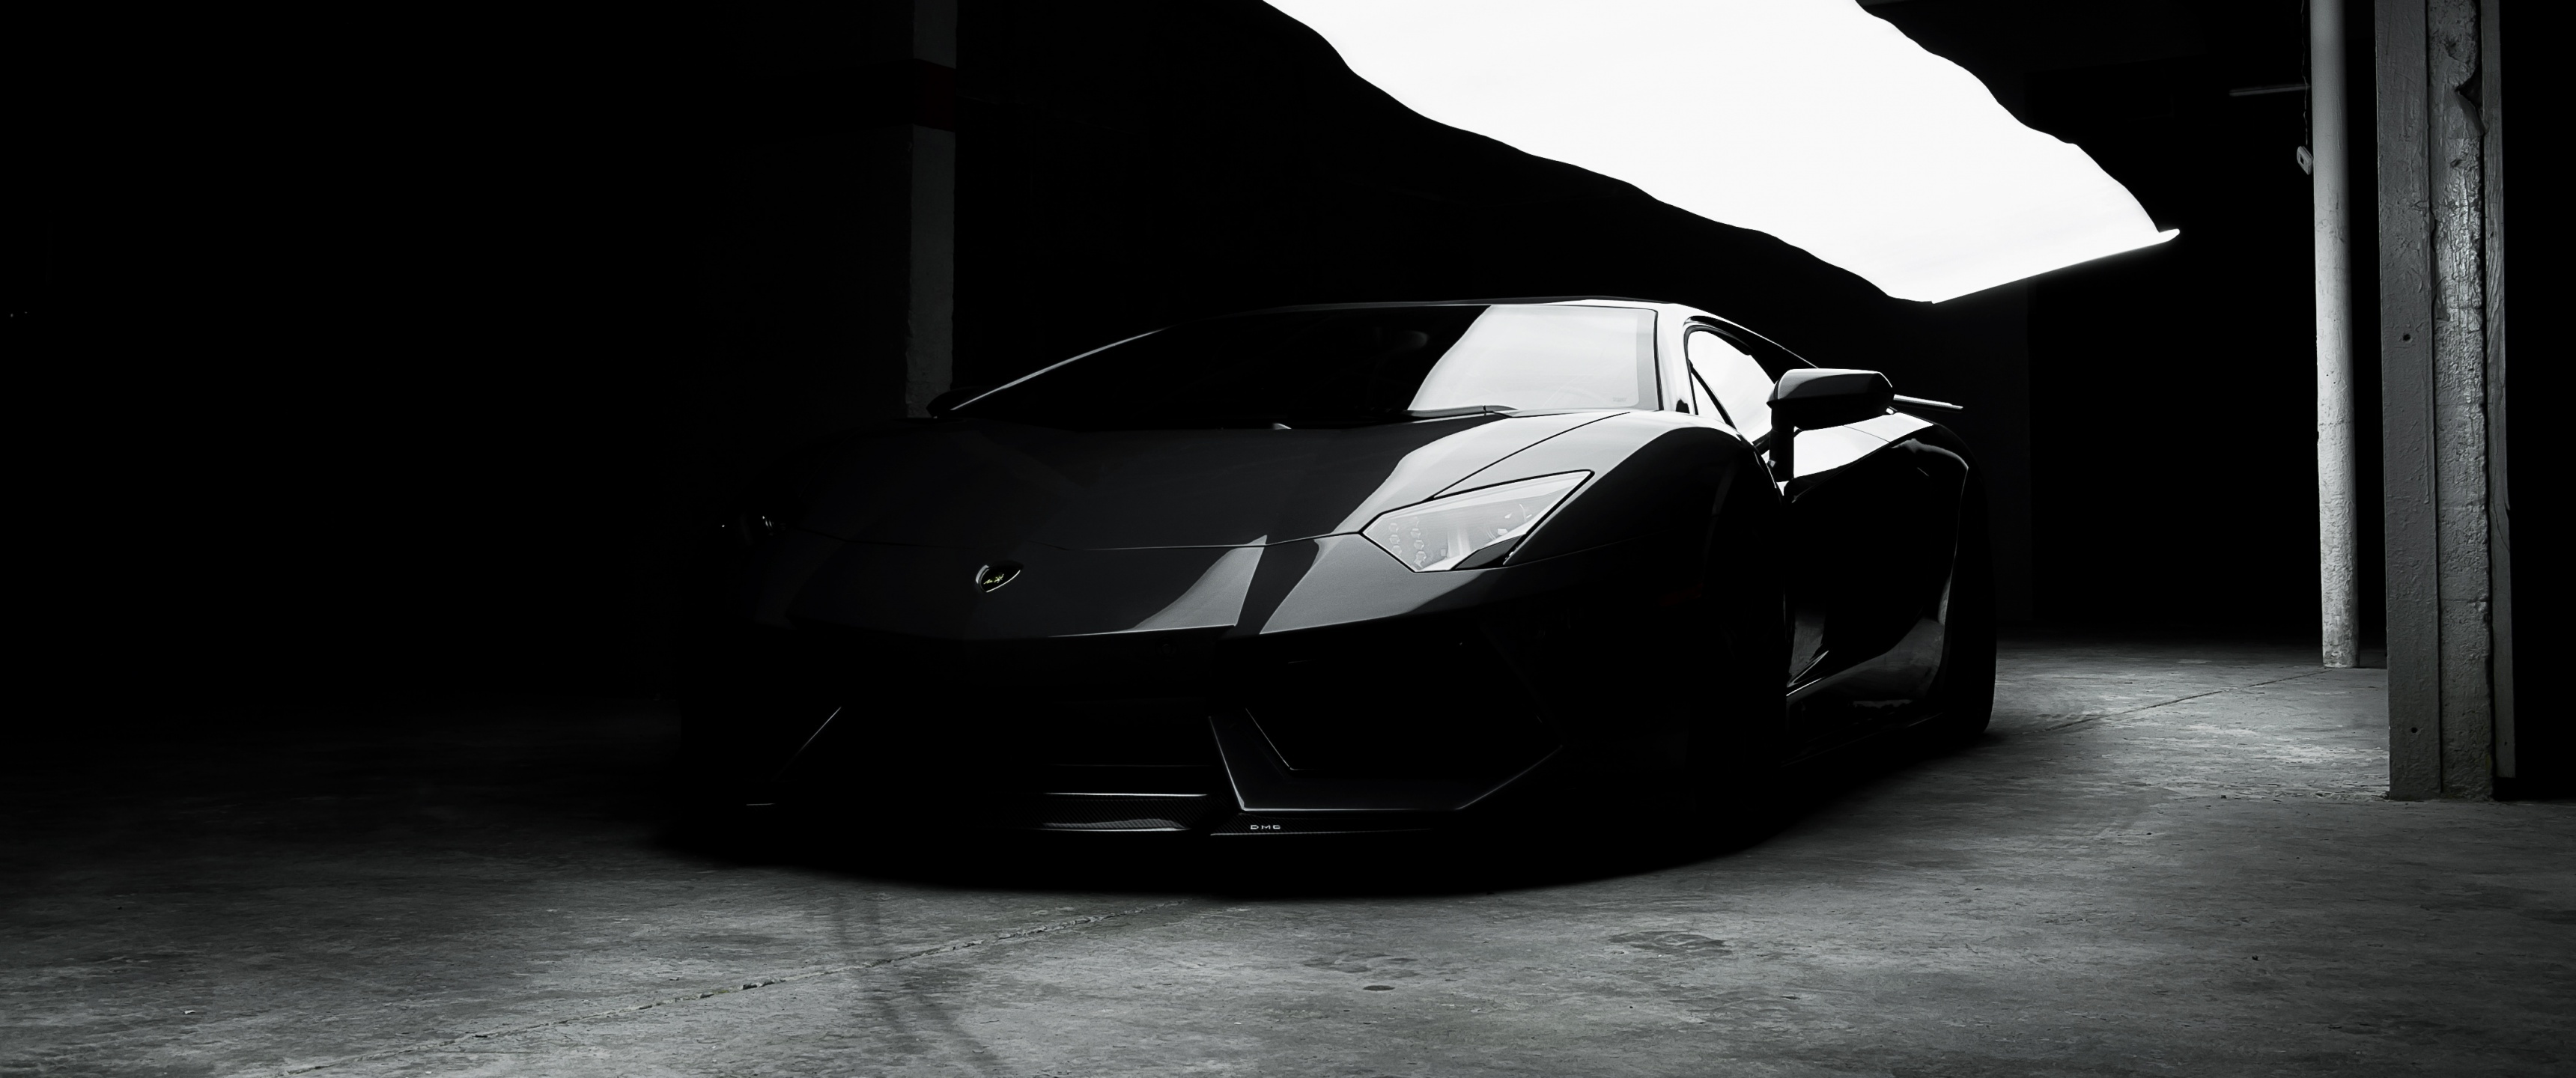 Lamborghini Aventador, 4K black car beauty, CGI perfection, Blackdark allure, 3440x1440 Dual Screen Desktop